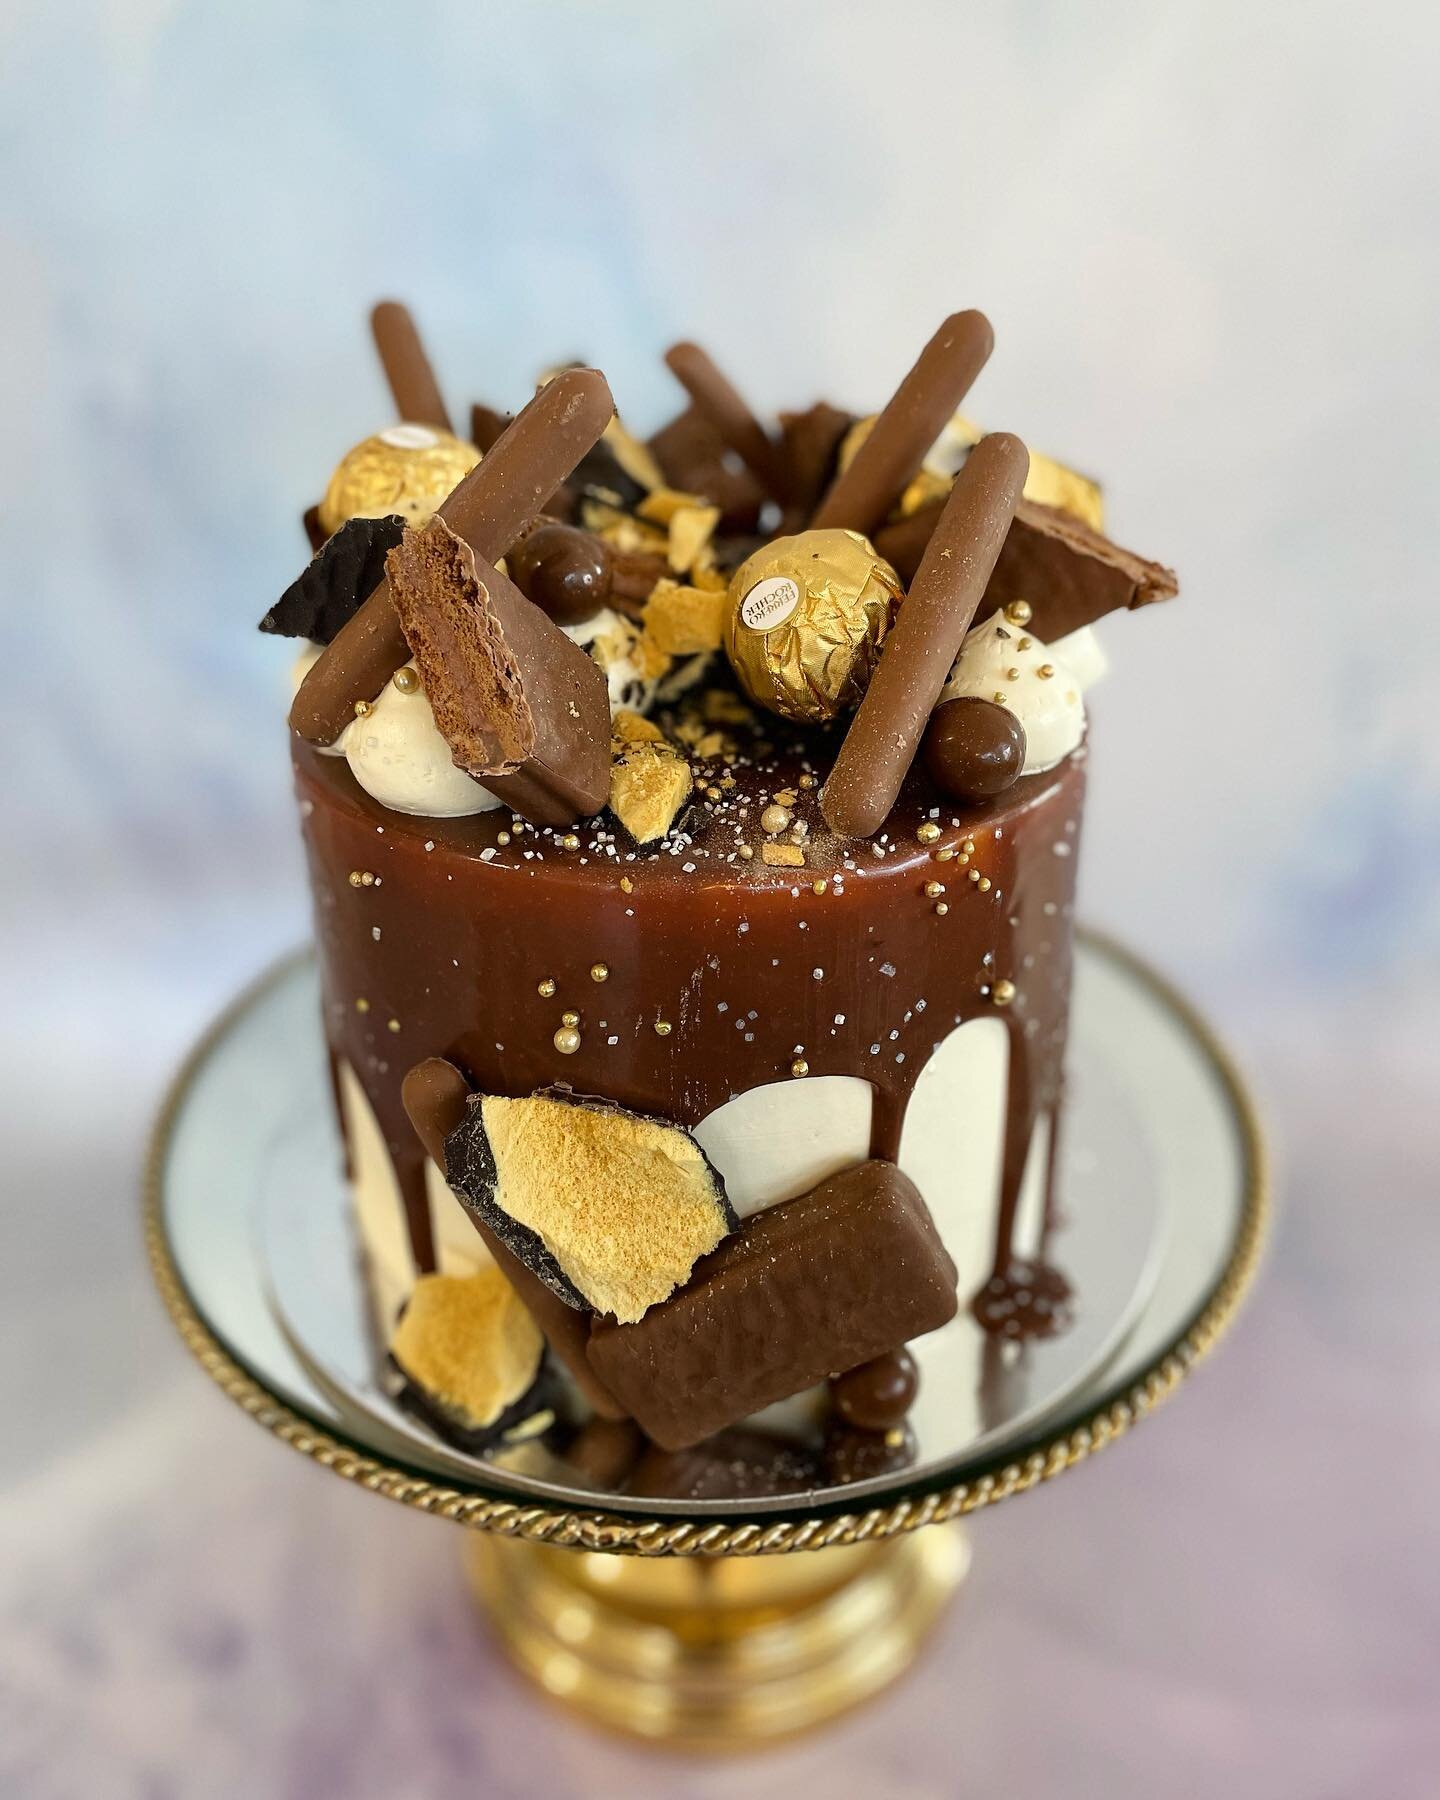 Decadent Chocolate Overload Drip Cake #poshlittlecakes #perthcake #cakesperth #cakesofperth #cakesofinstagram #buttercream #chocolate #chocolatelover #acdnmember #wiltoncakes #worldofcakes #thebakefeed